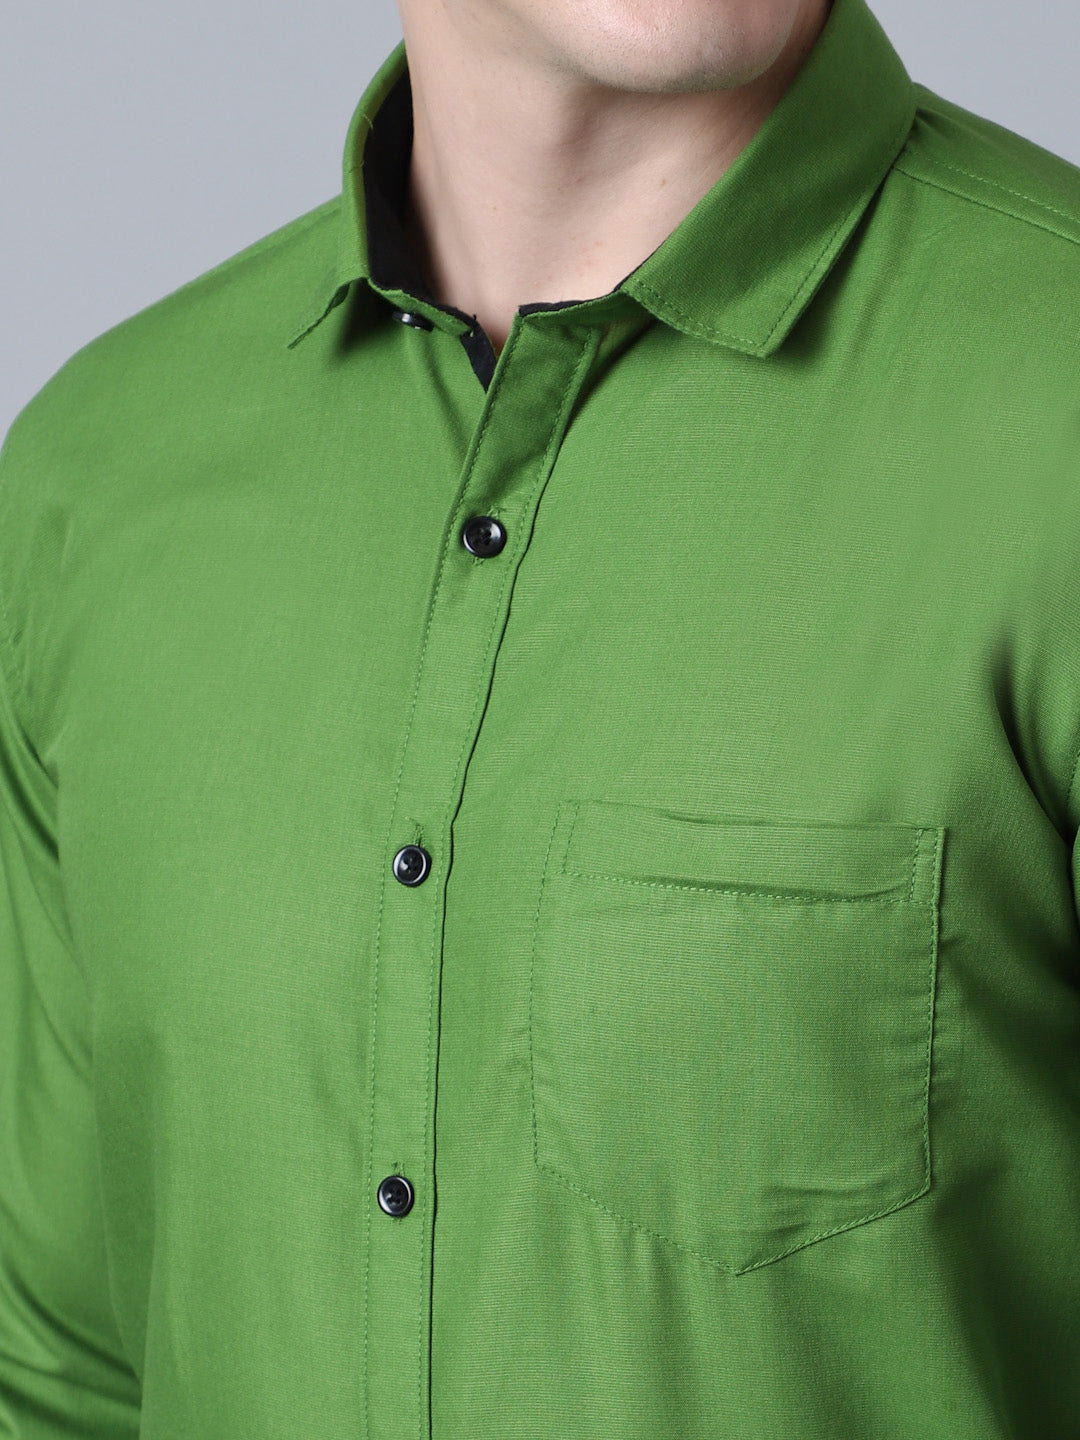 Majestic Man Versatile Solid Formal Shirt - Green